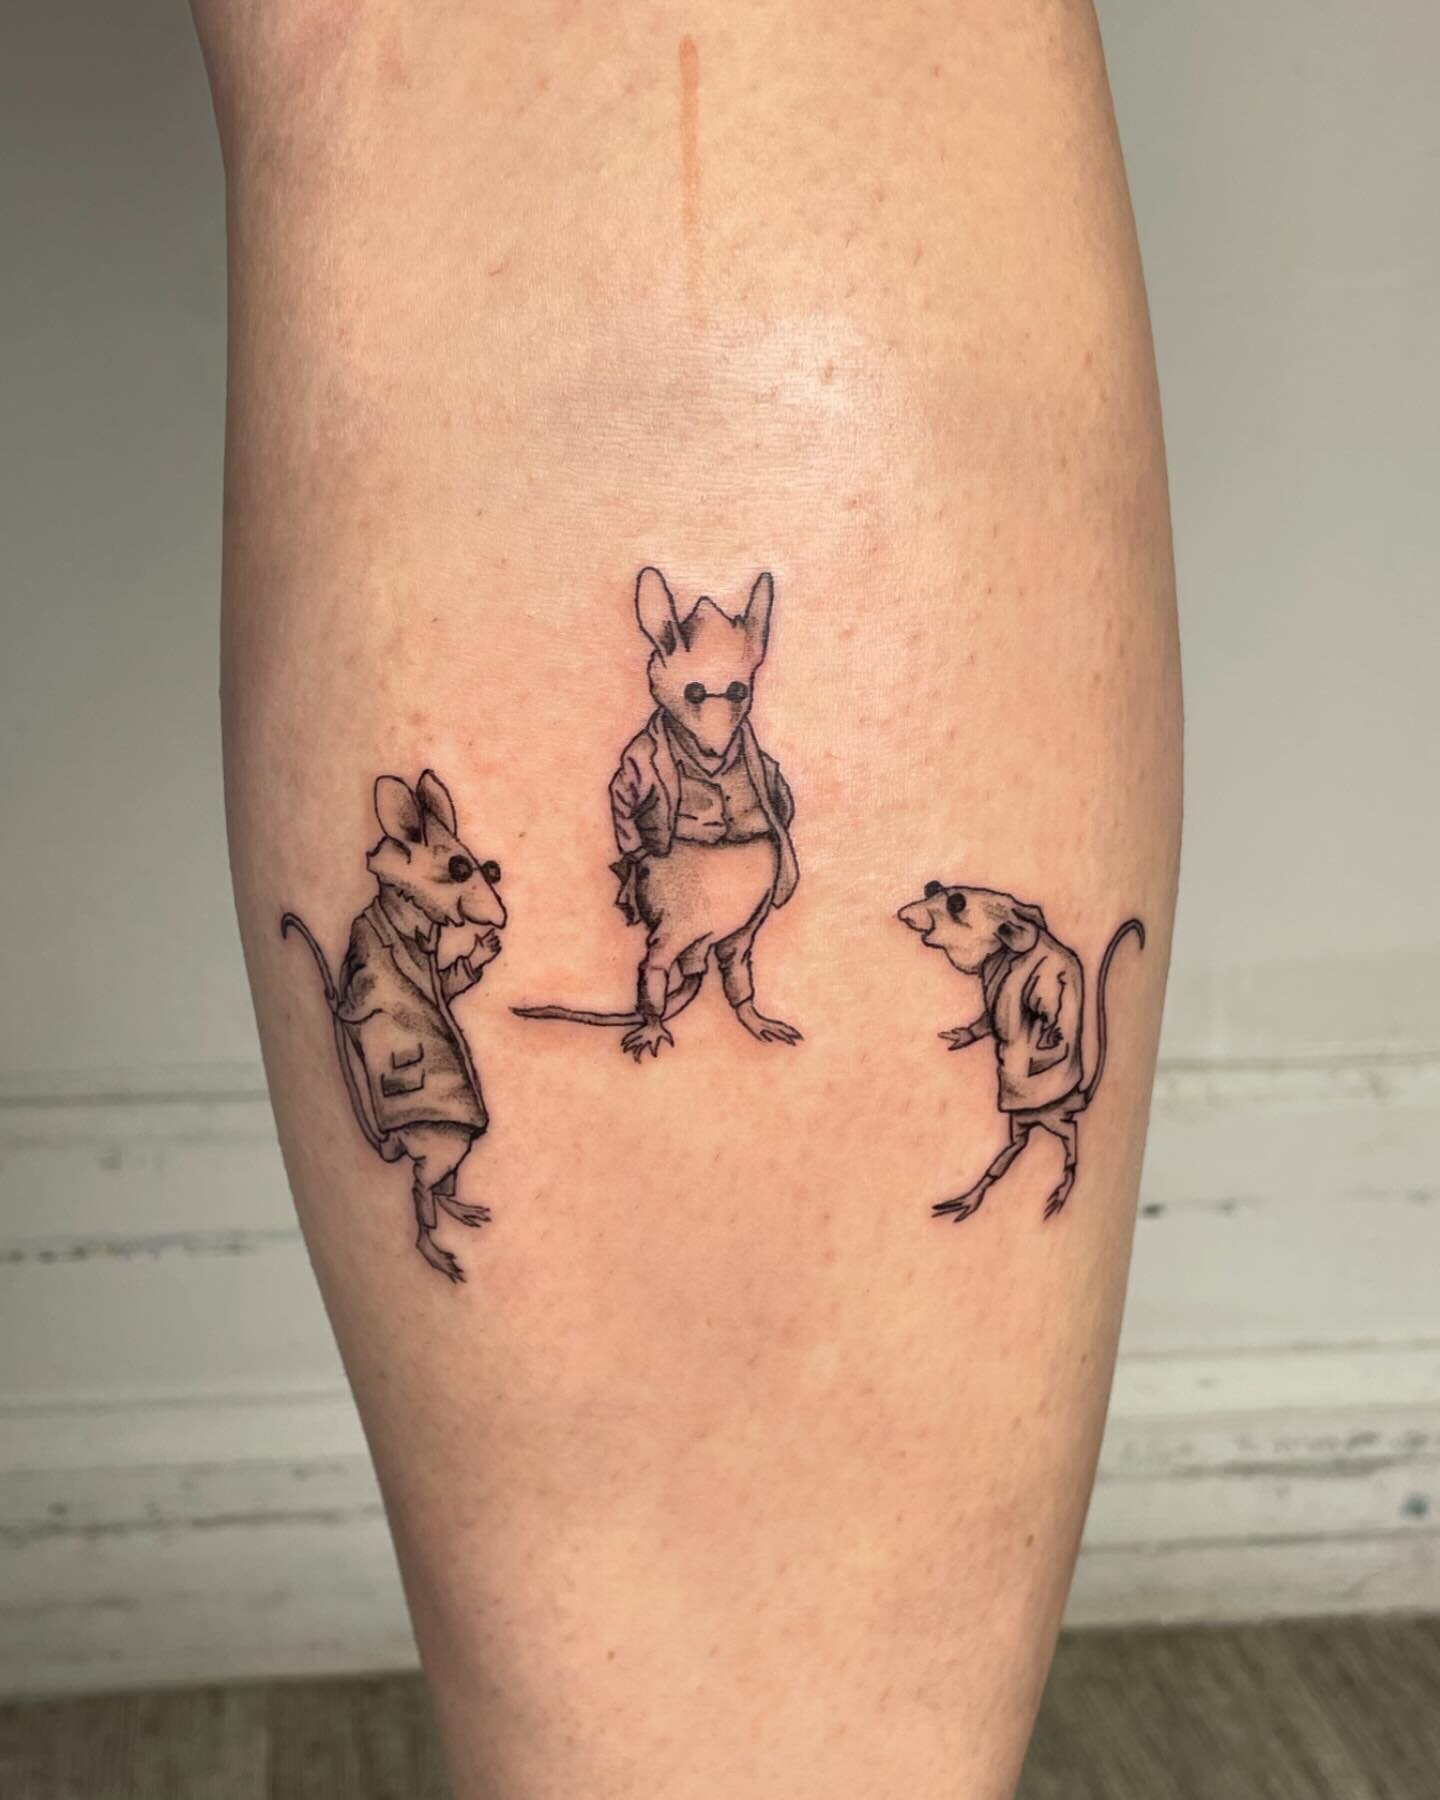 three blind mice for samantha &lt;3
&bull;
tattoo done using products from @alliancetattoosupply 
&bull;
#tattoo #fineline #finelinetattoo #apprentice #apprenticetattoo #tattooapprentice #sf #sftattoo #sanfrancisco #sanfranciscotattoo #bayarea #bayar